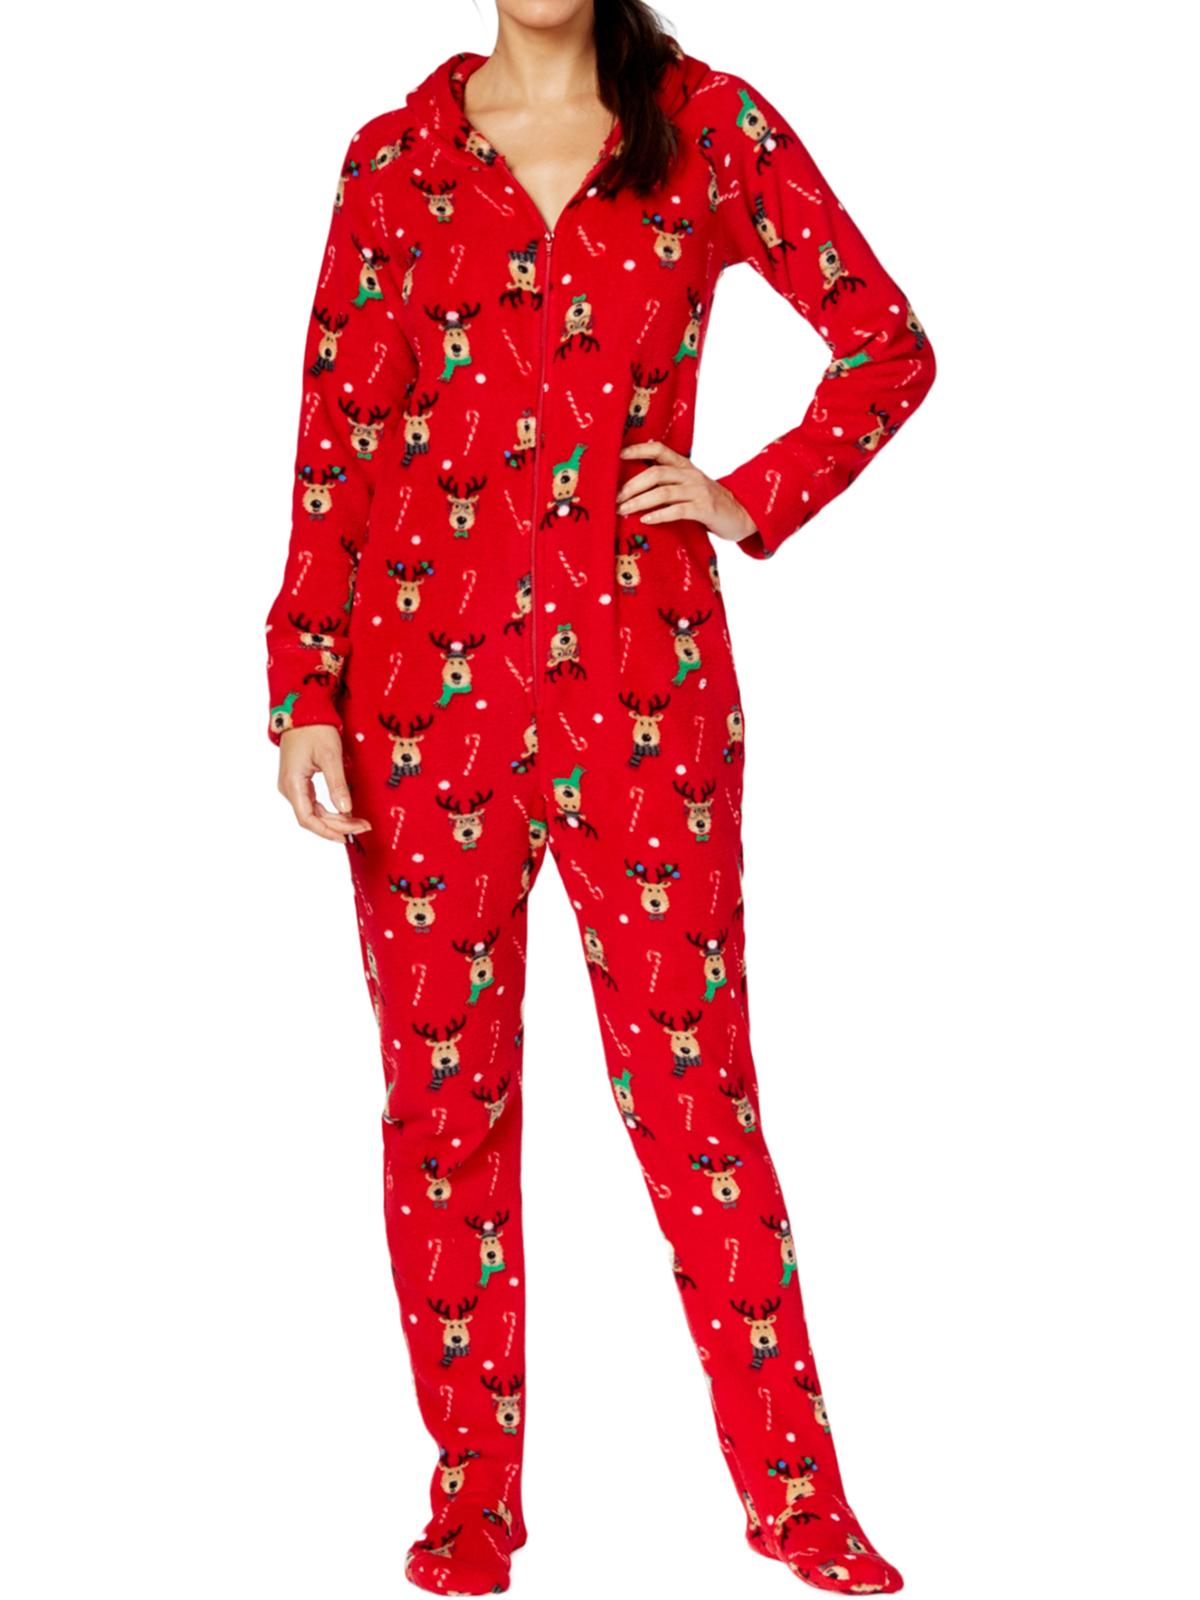 Reindeer Pajamas for Women